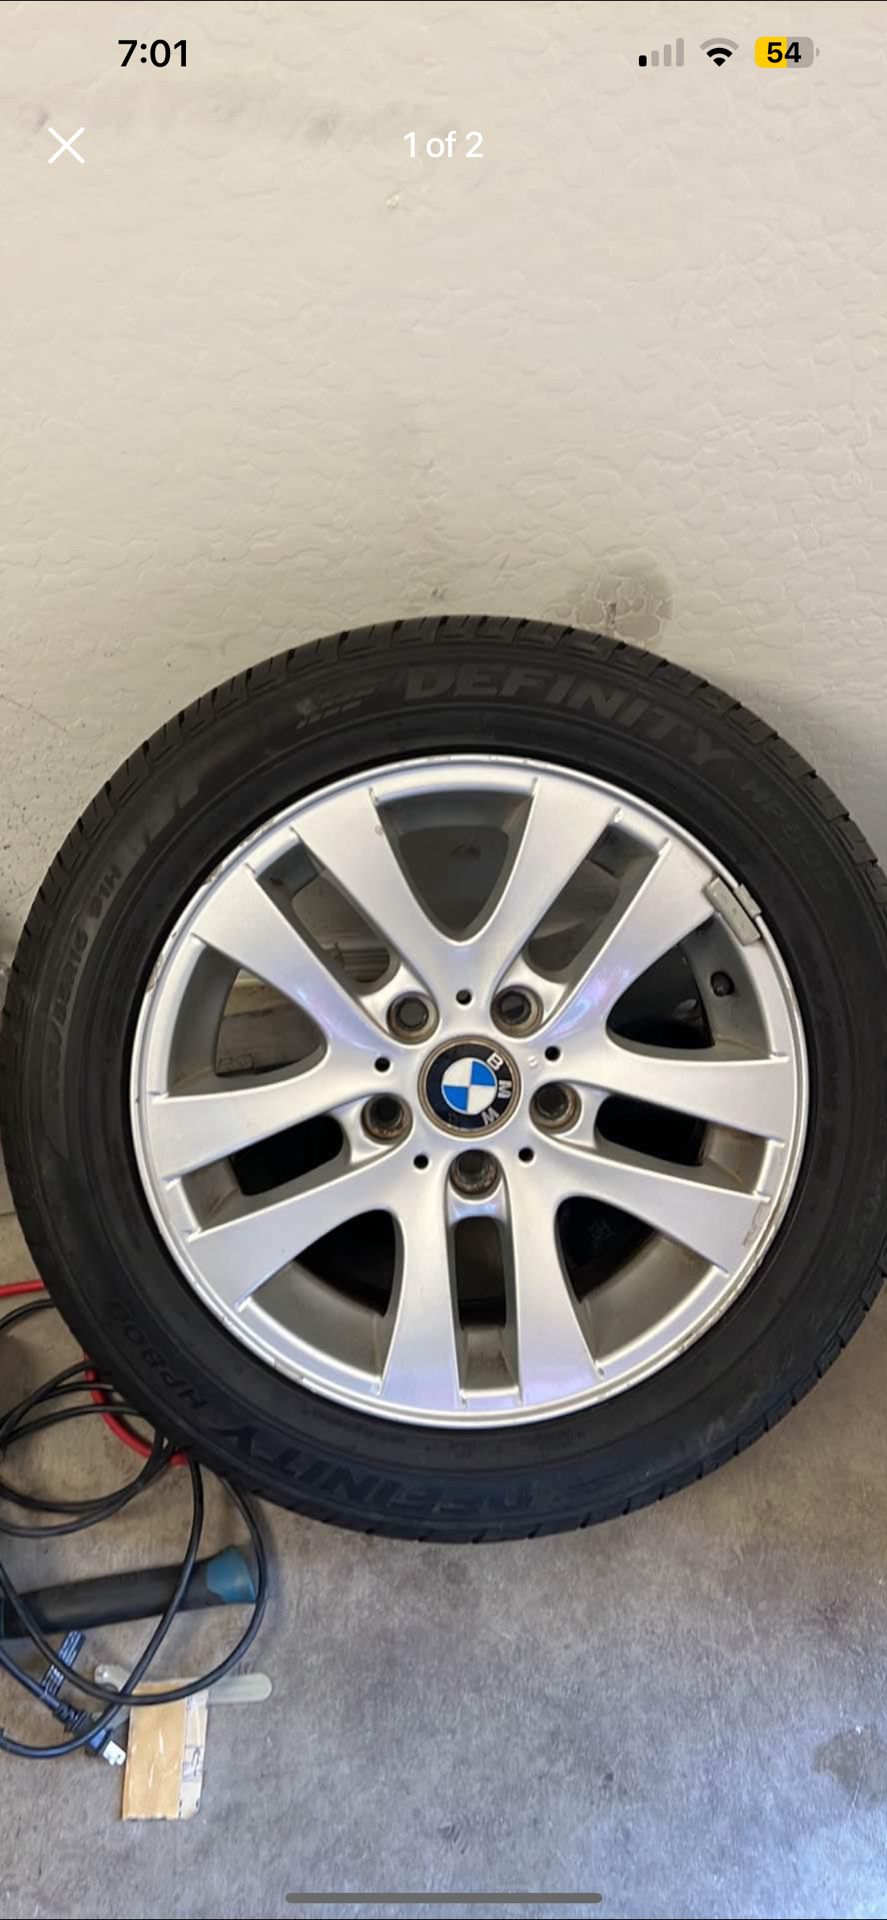 06 BMW 3251 E90 1 wheel with tire 16x7